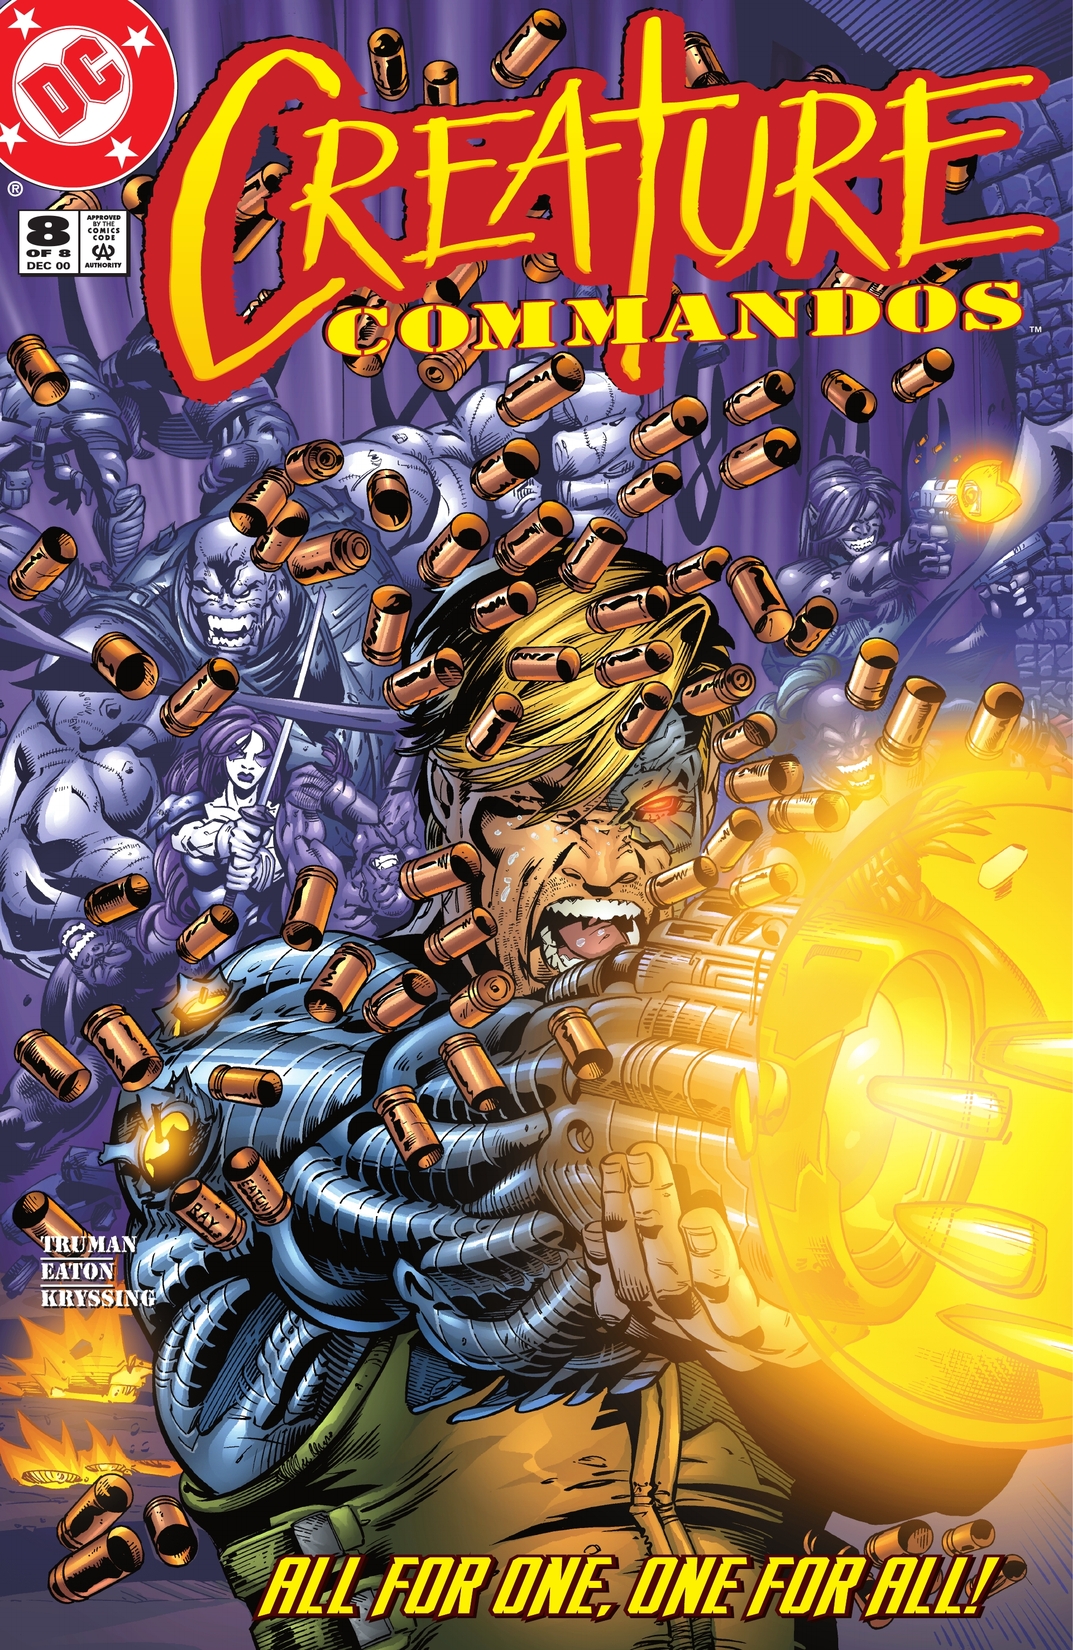 Creature Commandos #8 preview images